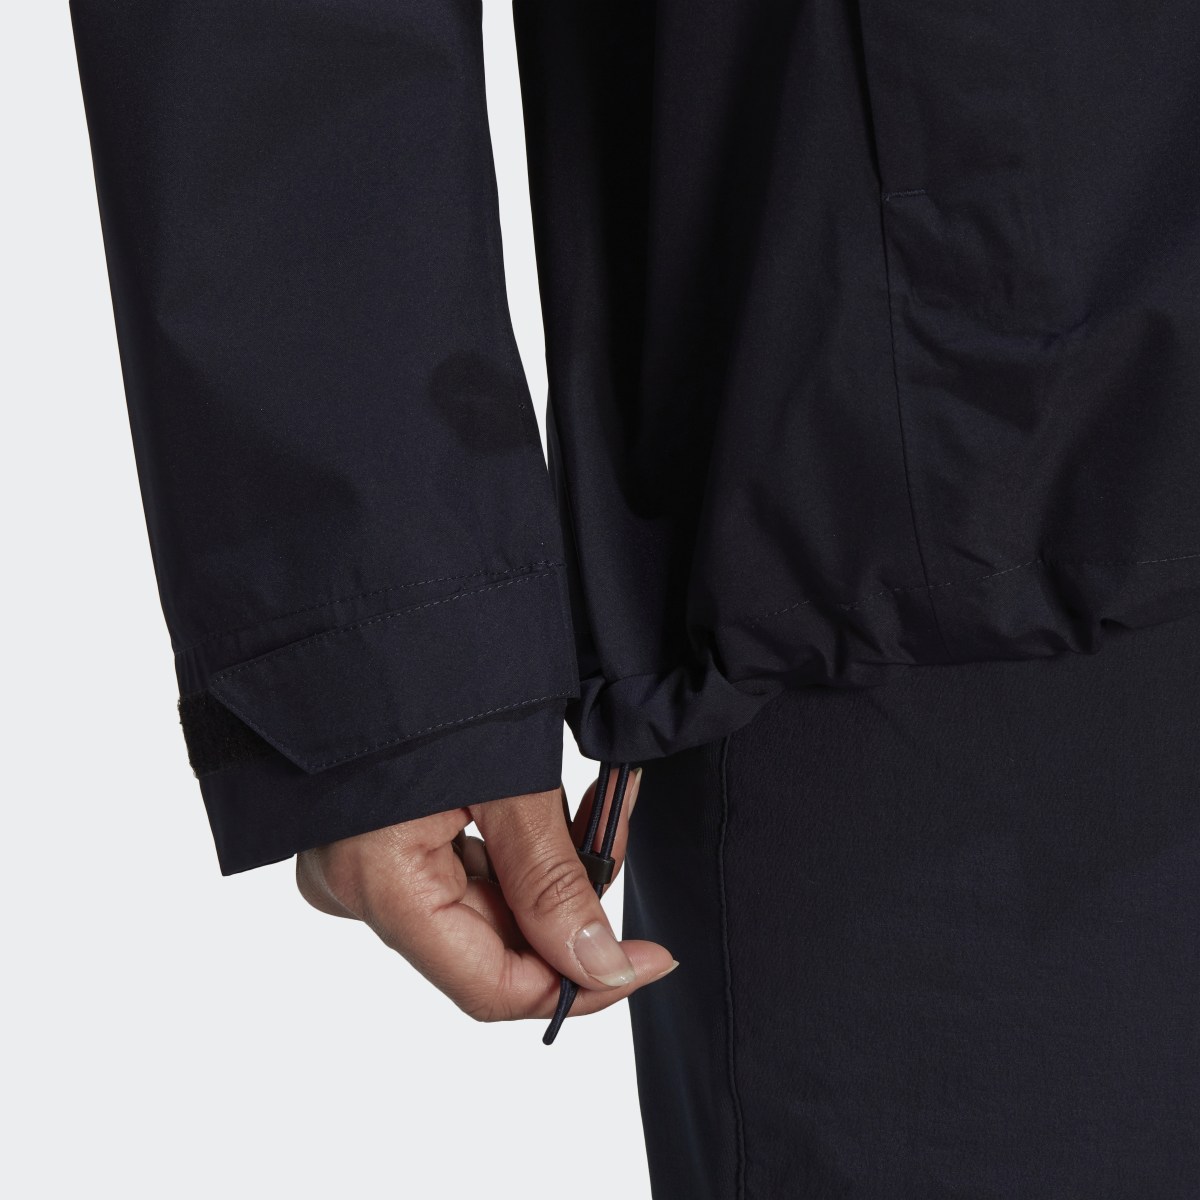 Adidas Terrex GORE-TEX Paclite Rain Jacket. 10